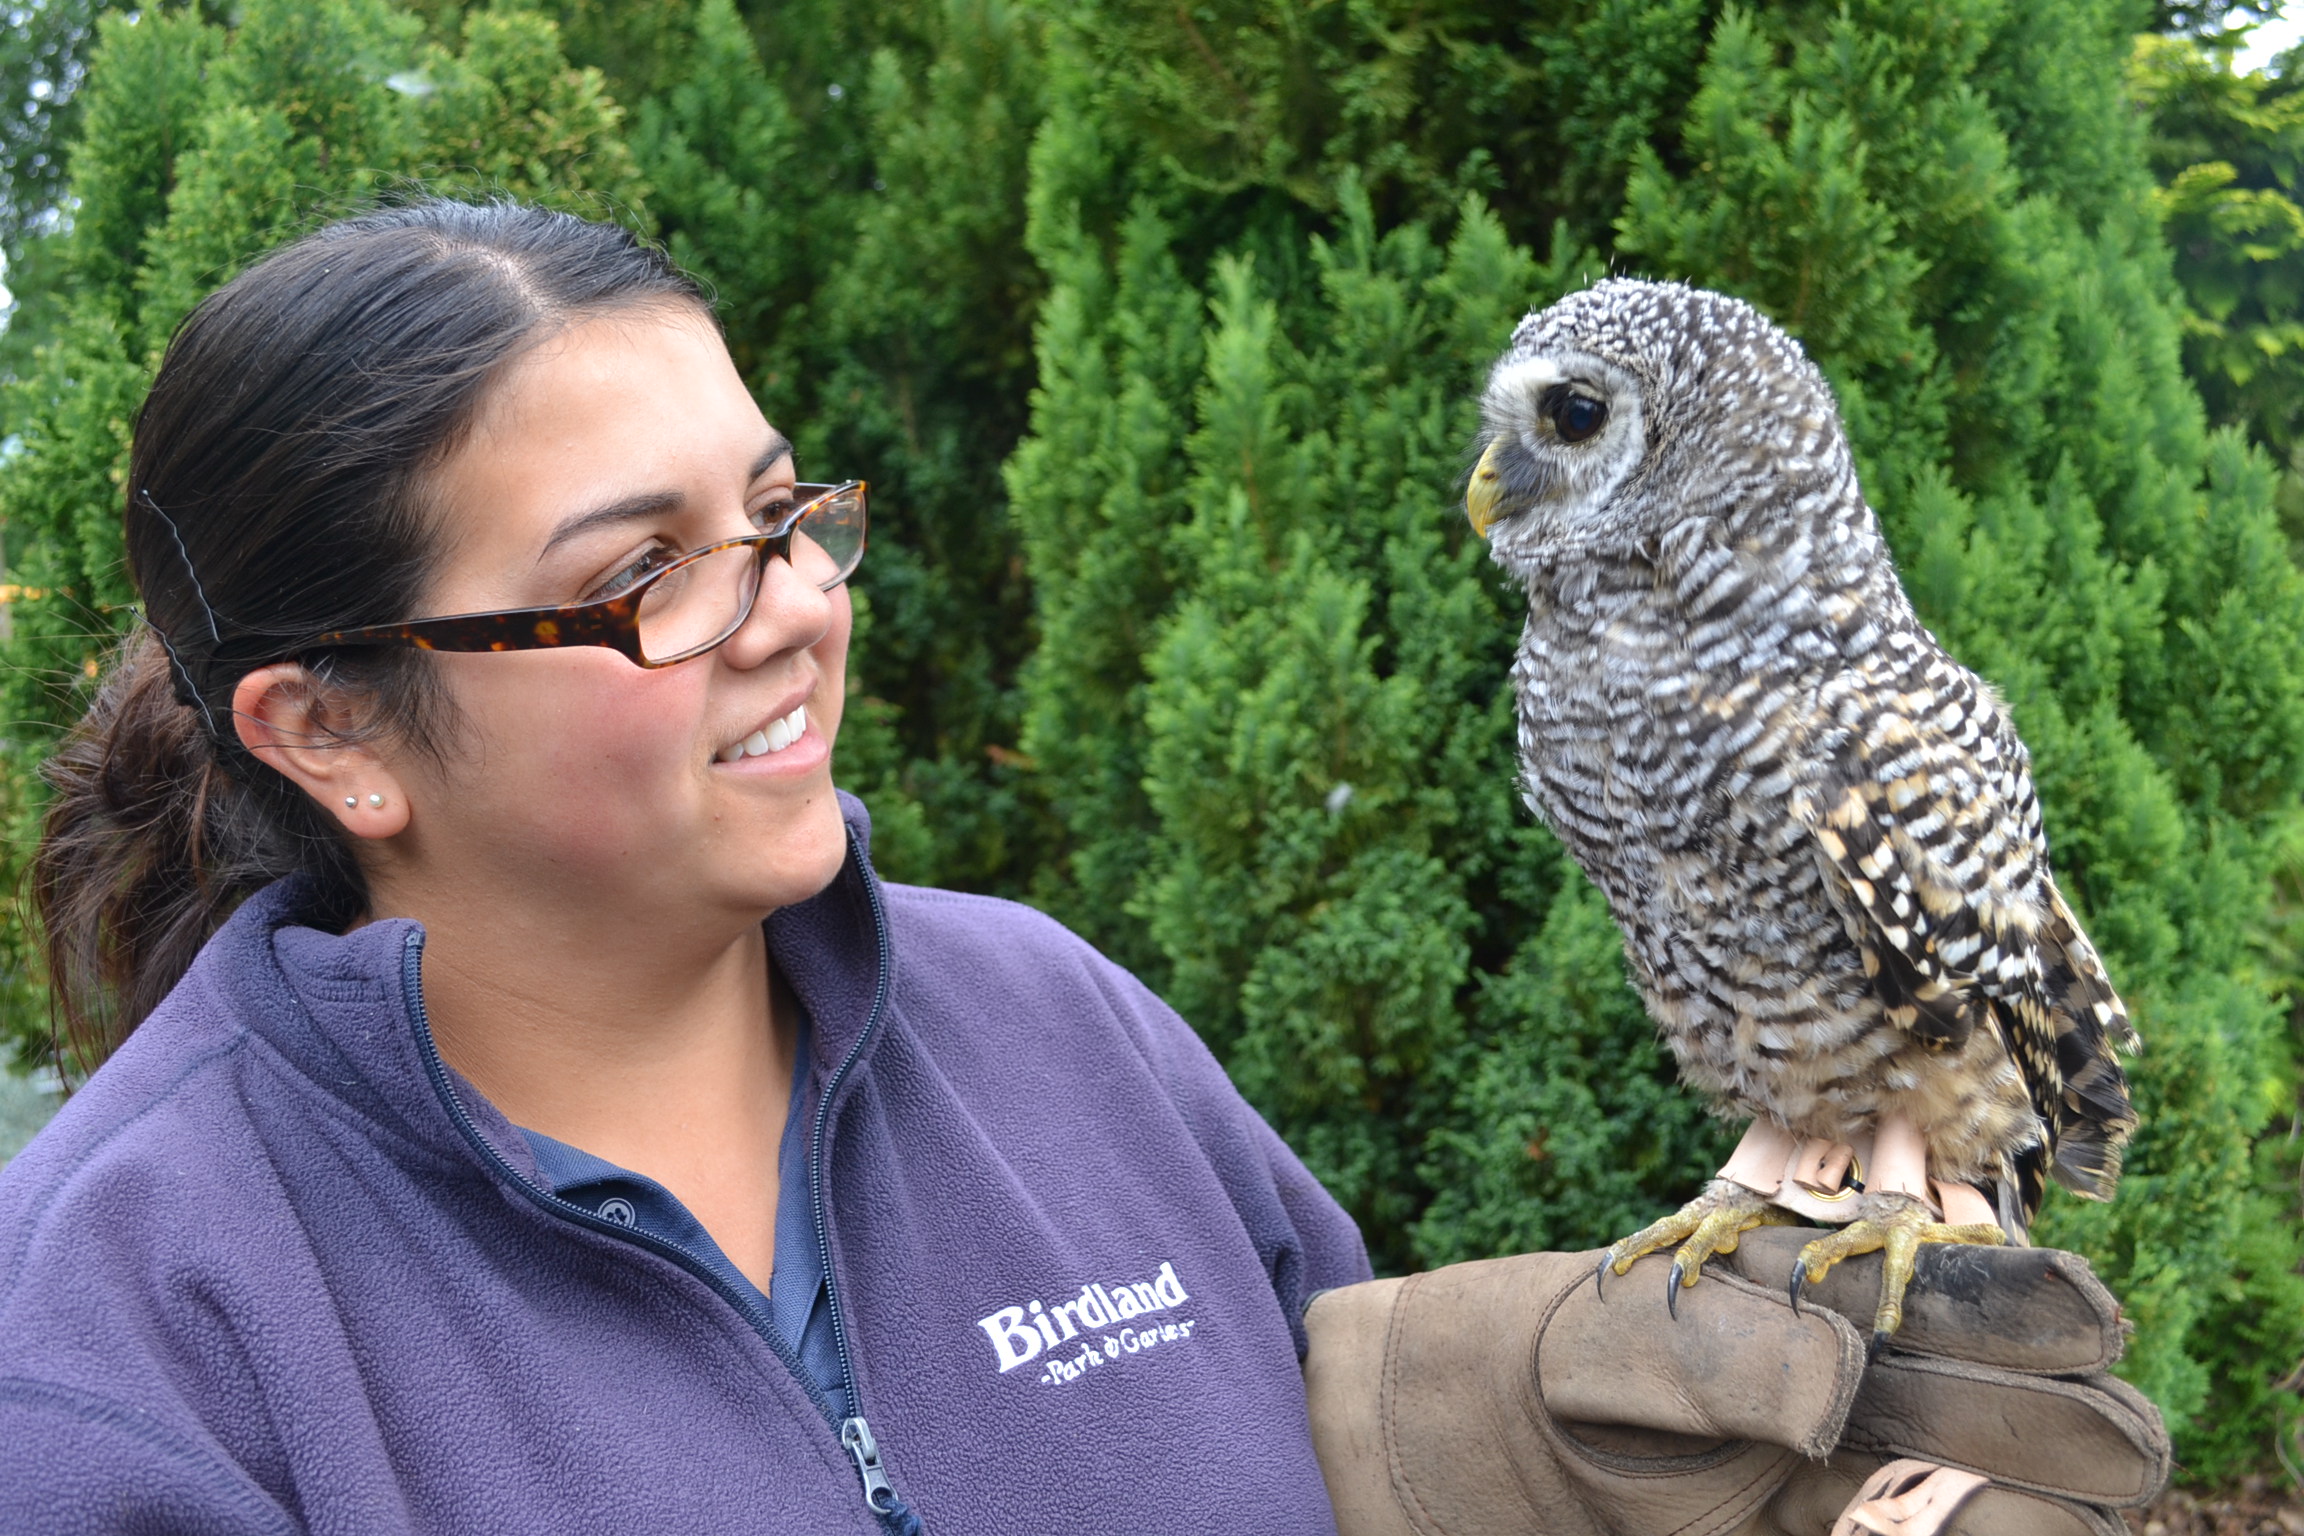 Helen Perry and Chaco Owl 2 - Birdland Celebrates International Owl Awareness Day